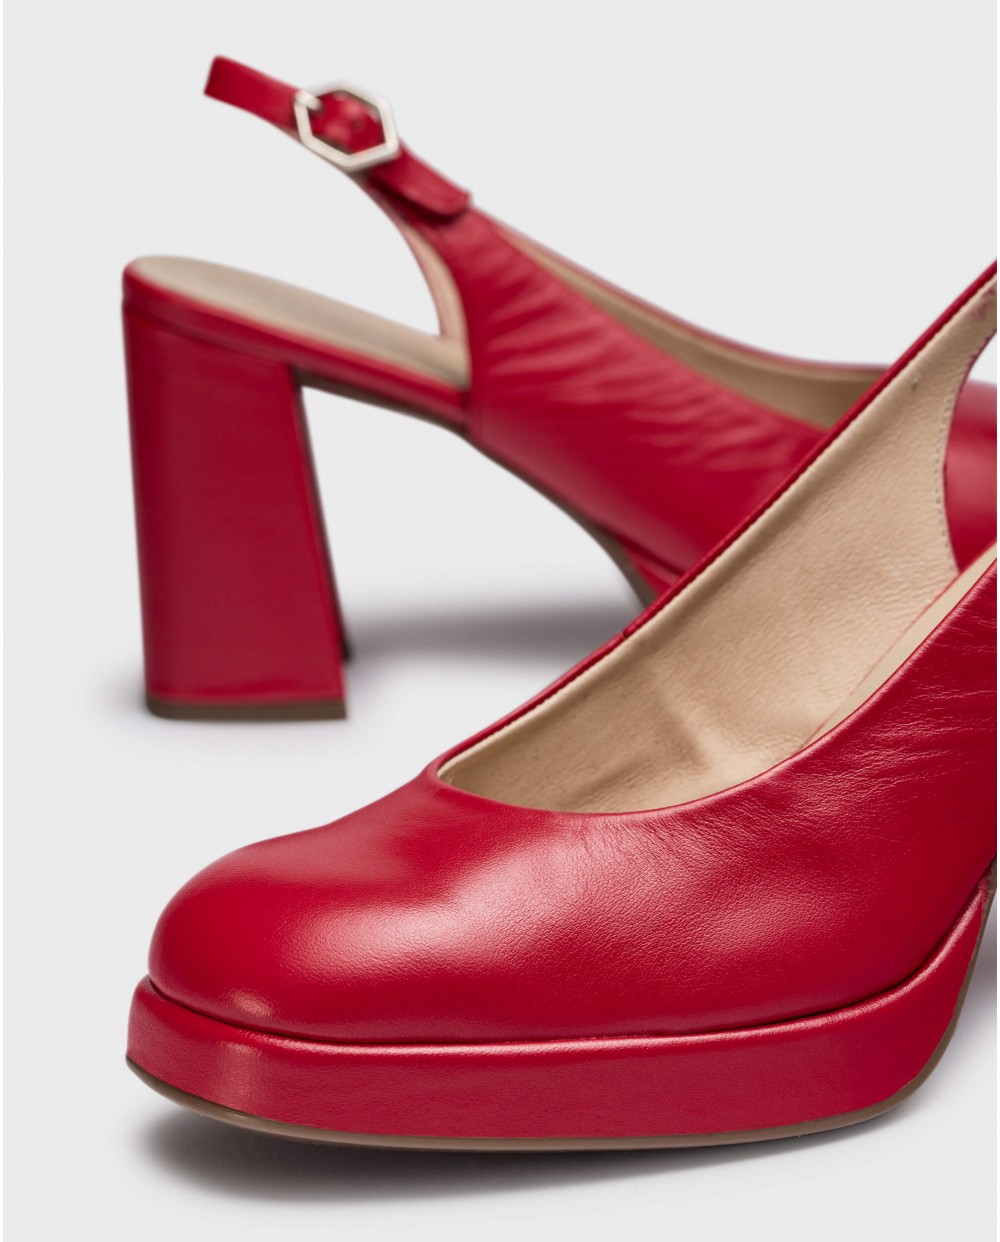 Wonders-Outlet-Zapato VALERY rojo